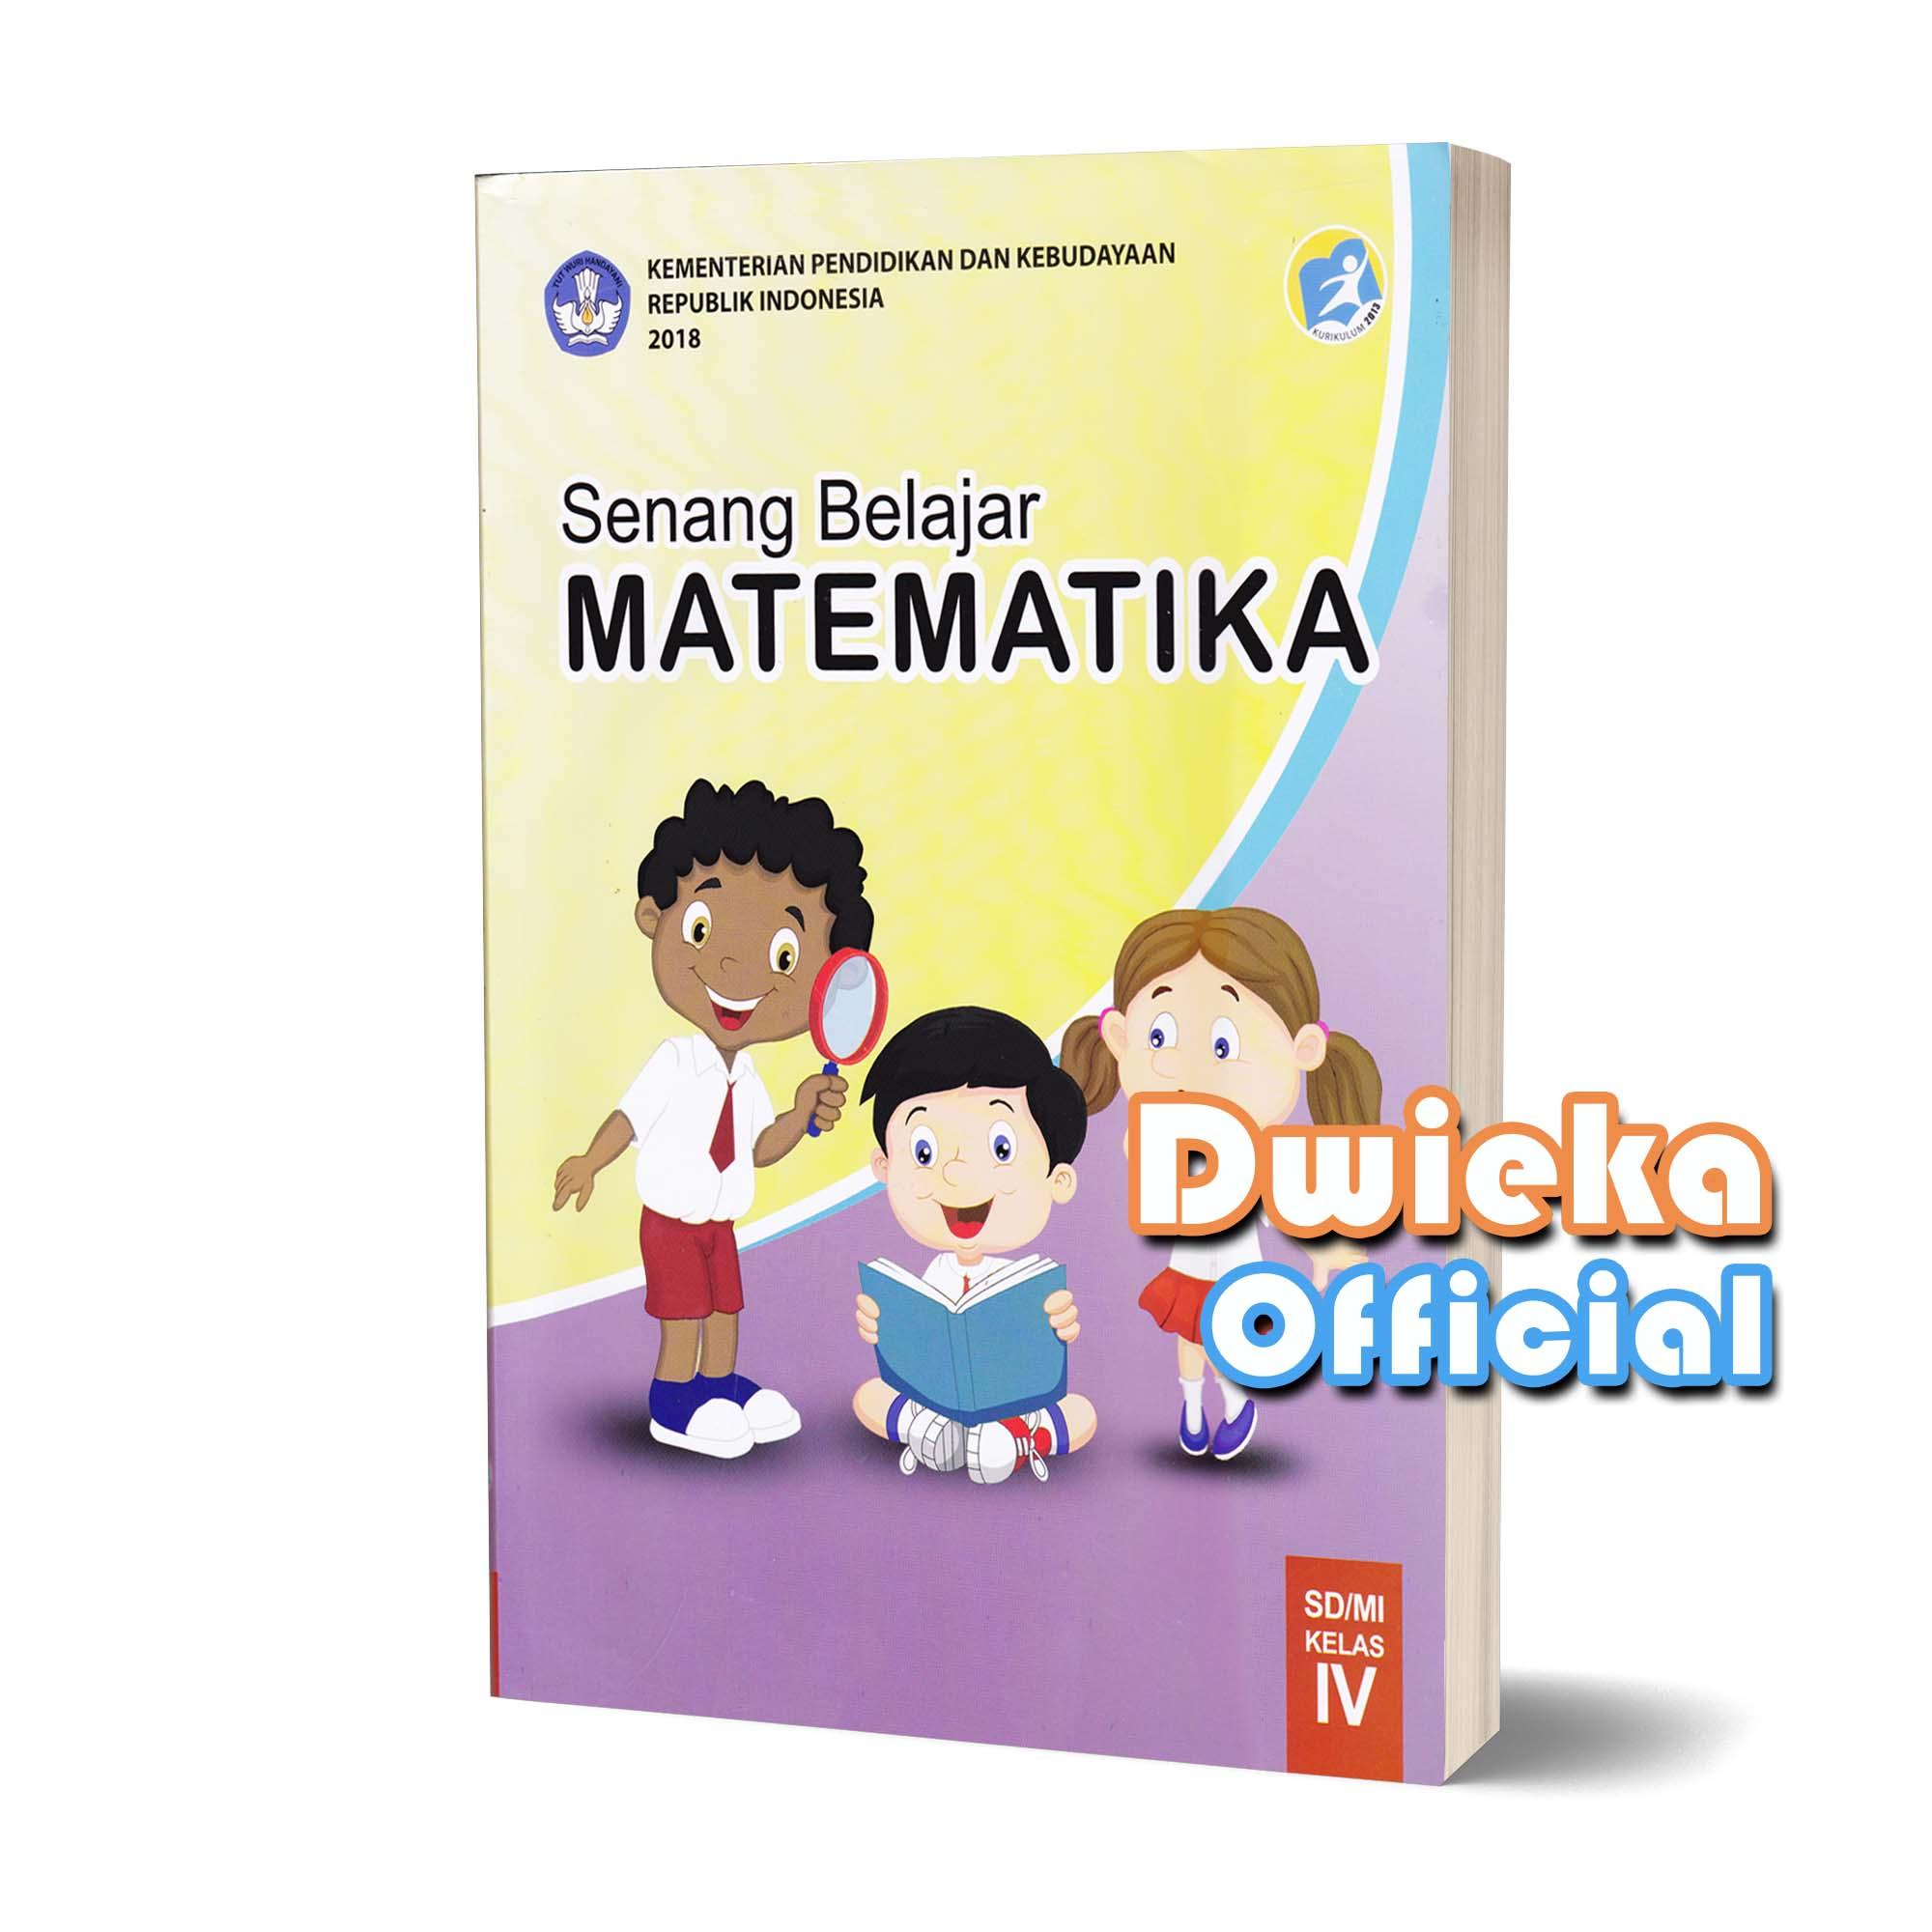 Buku Matematika Kelas 4 SD "Senang Belajar Matematika" Kurikulum 2013